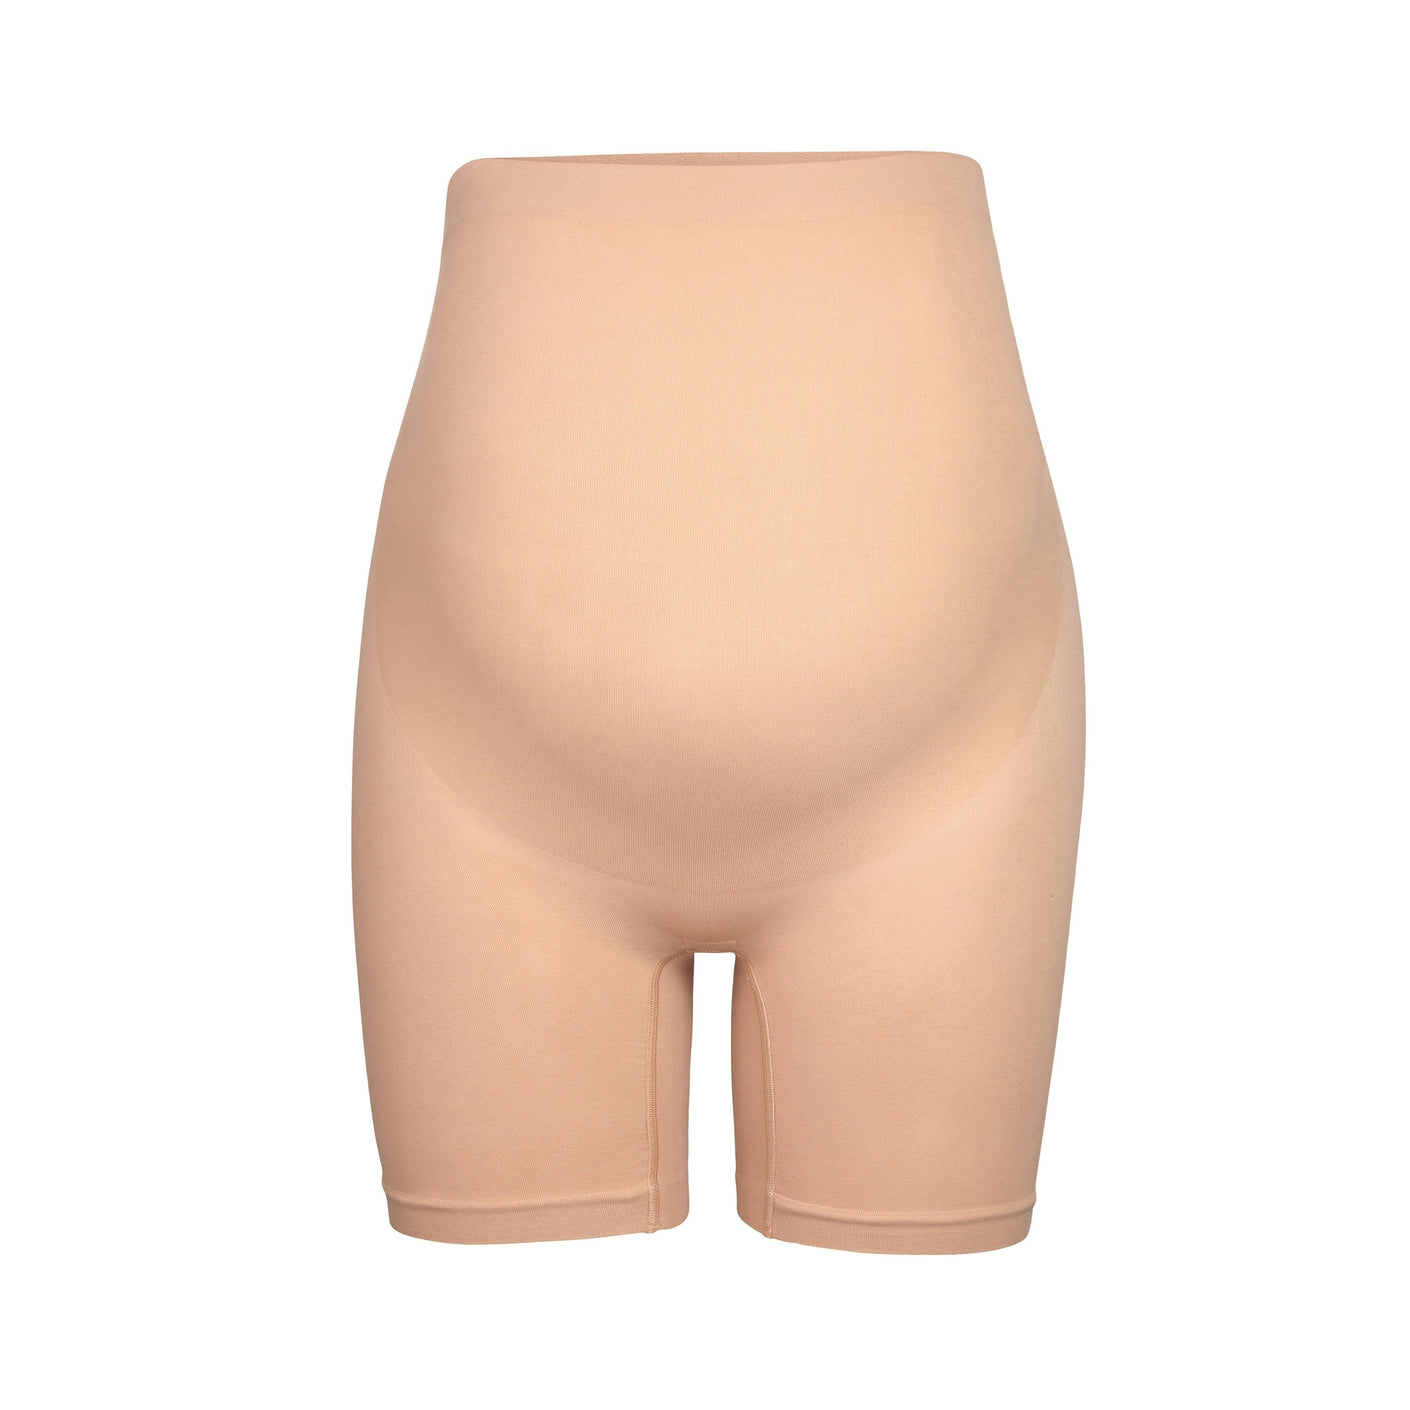 Spanx Power Mama Maternity Mid-Thigh Shaper Shorts, Nude